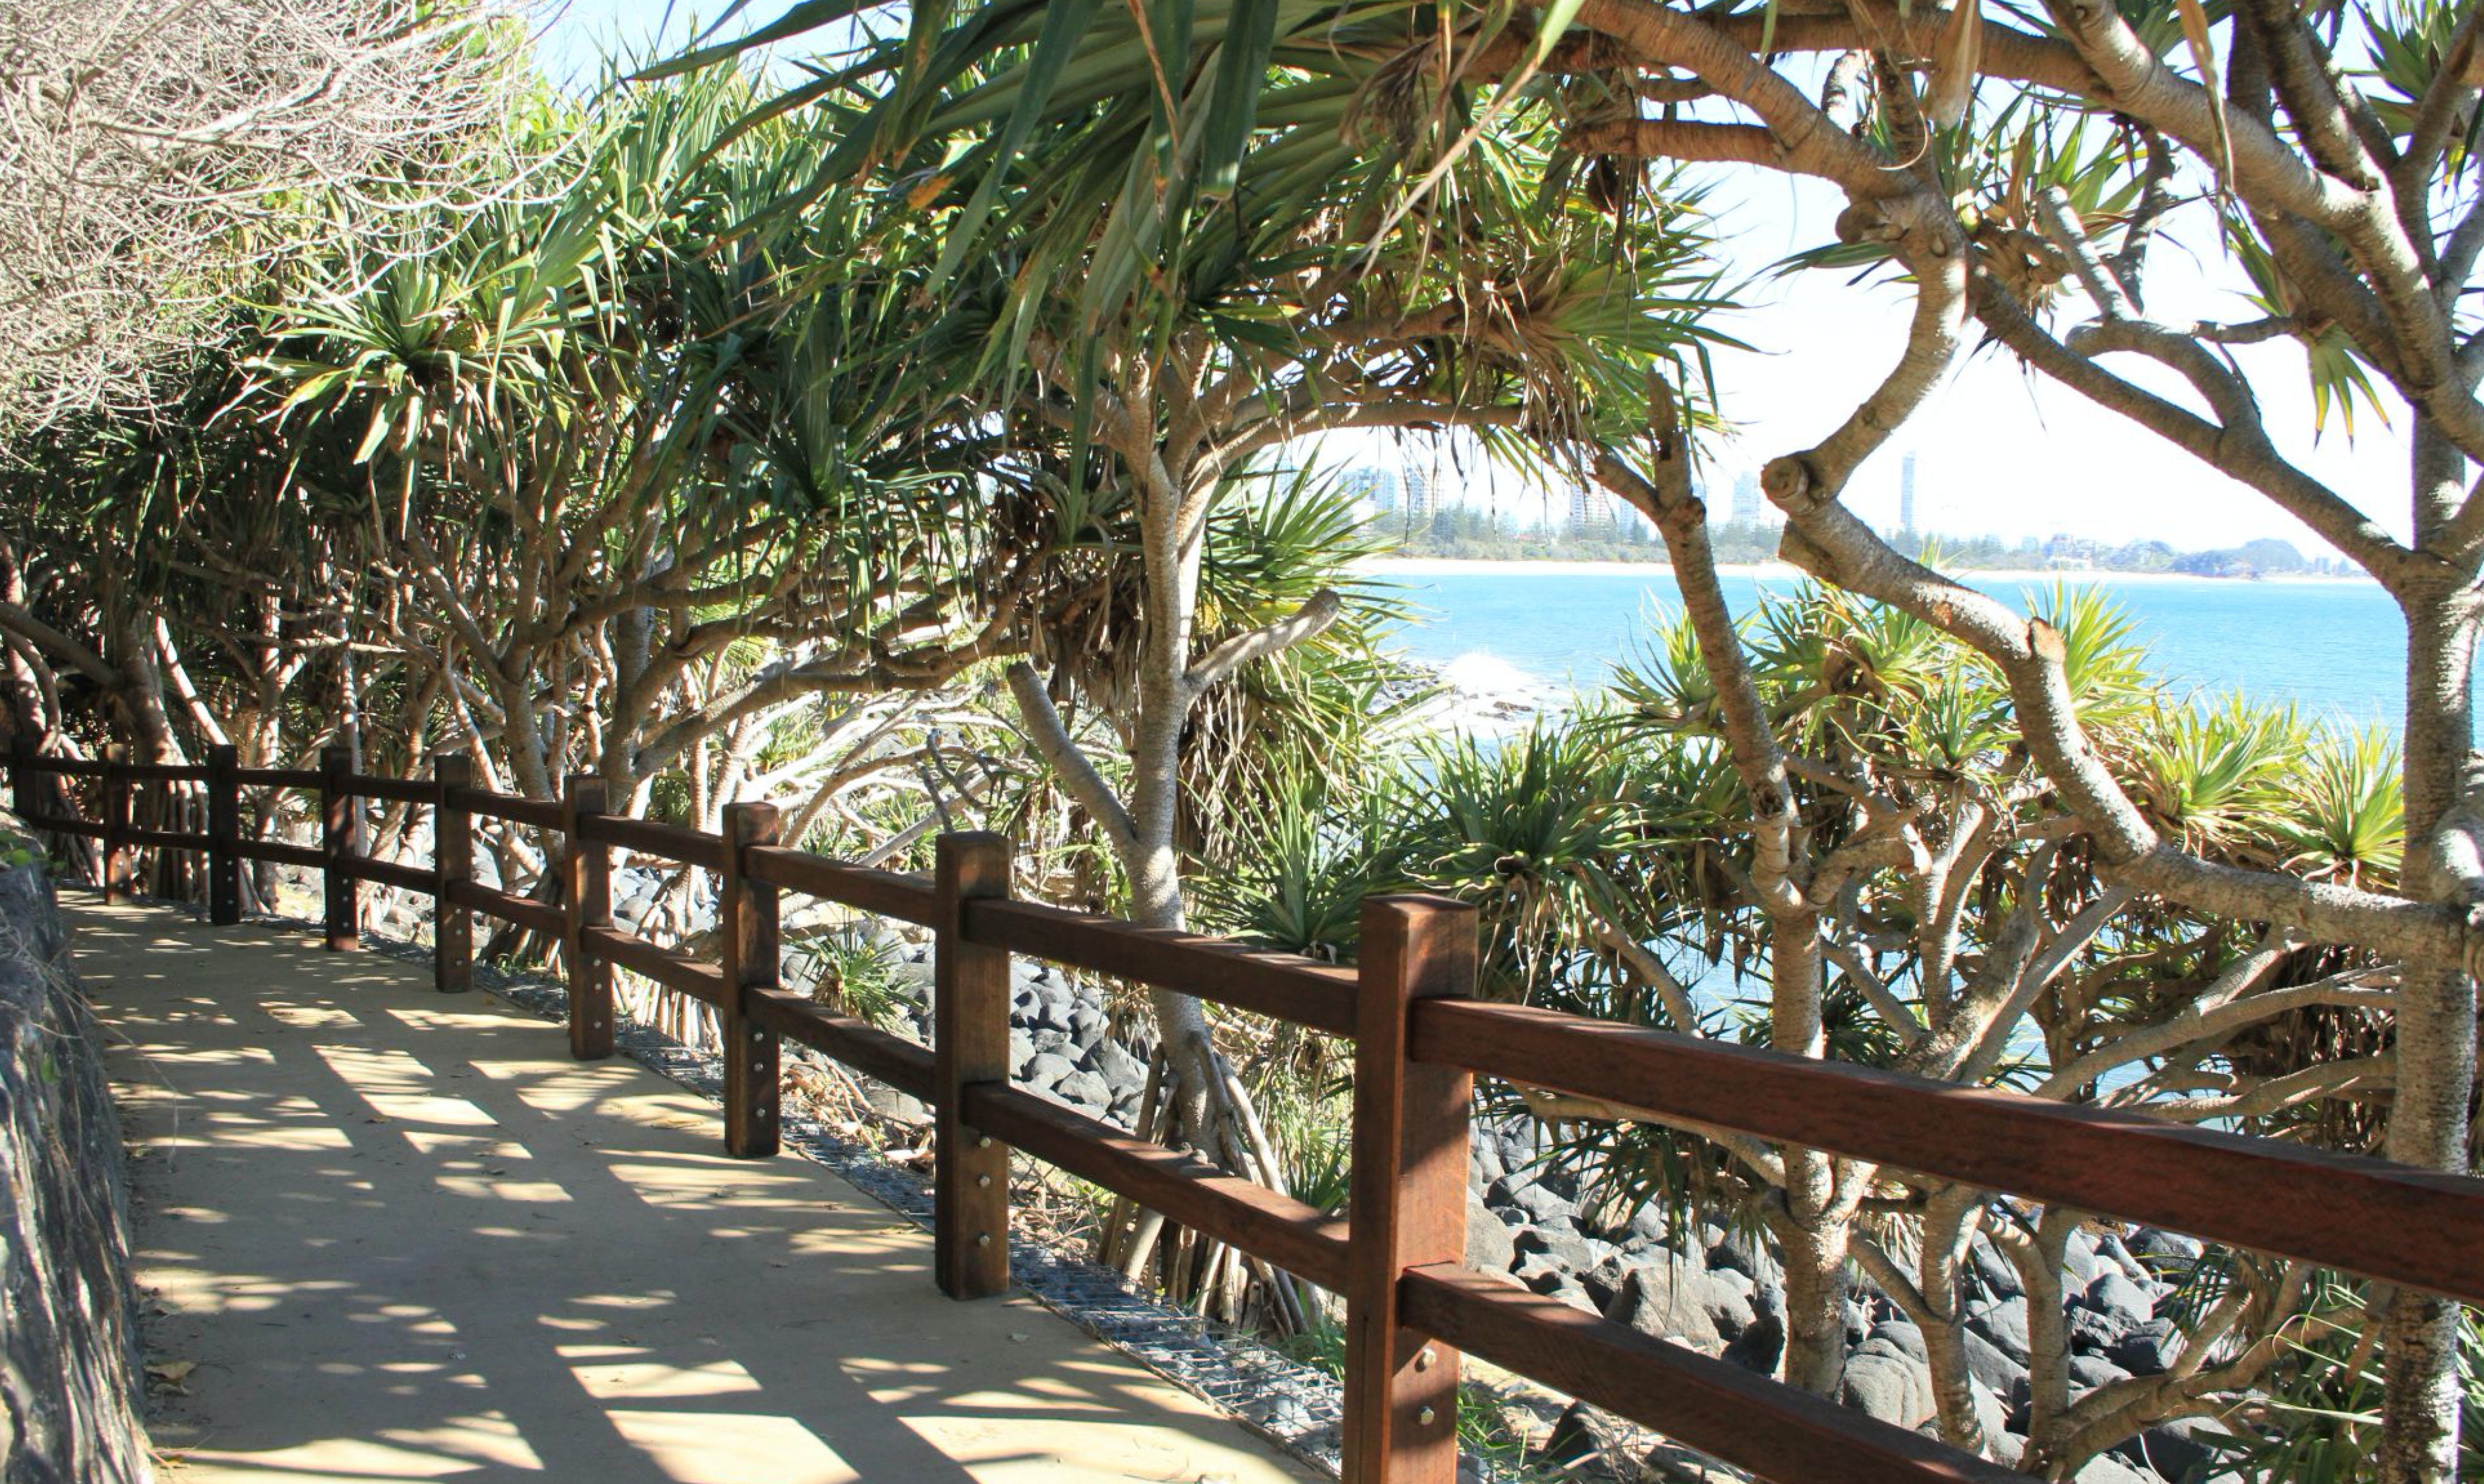 Best coastal treks in Australia